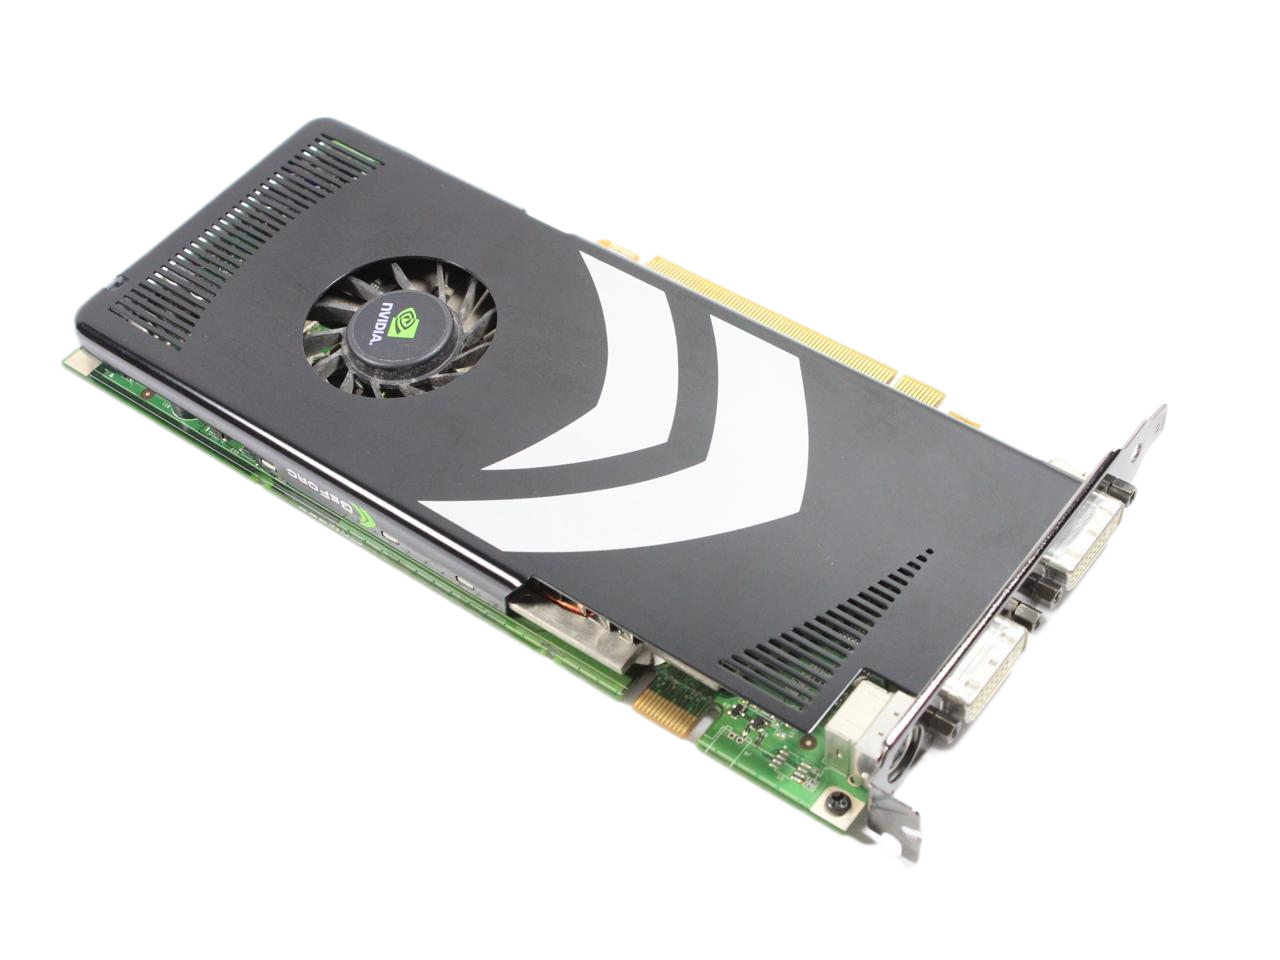 NVIDIA GeForce 8800 GT 512MB GDDR3 SDRAM 2560x1600 PCI Express 2.0 x16 Dual DVI Interface Graphic Card CP187